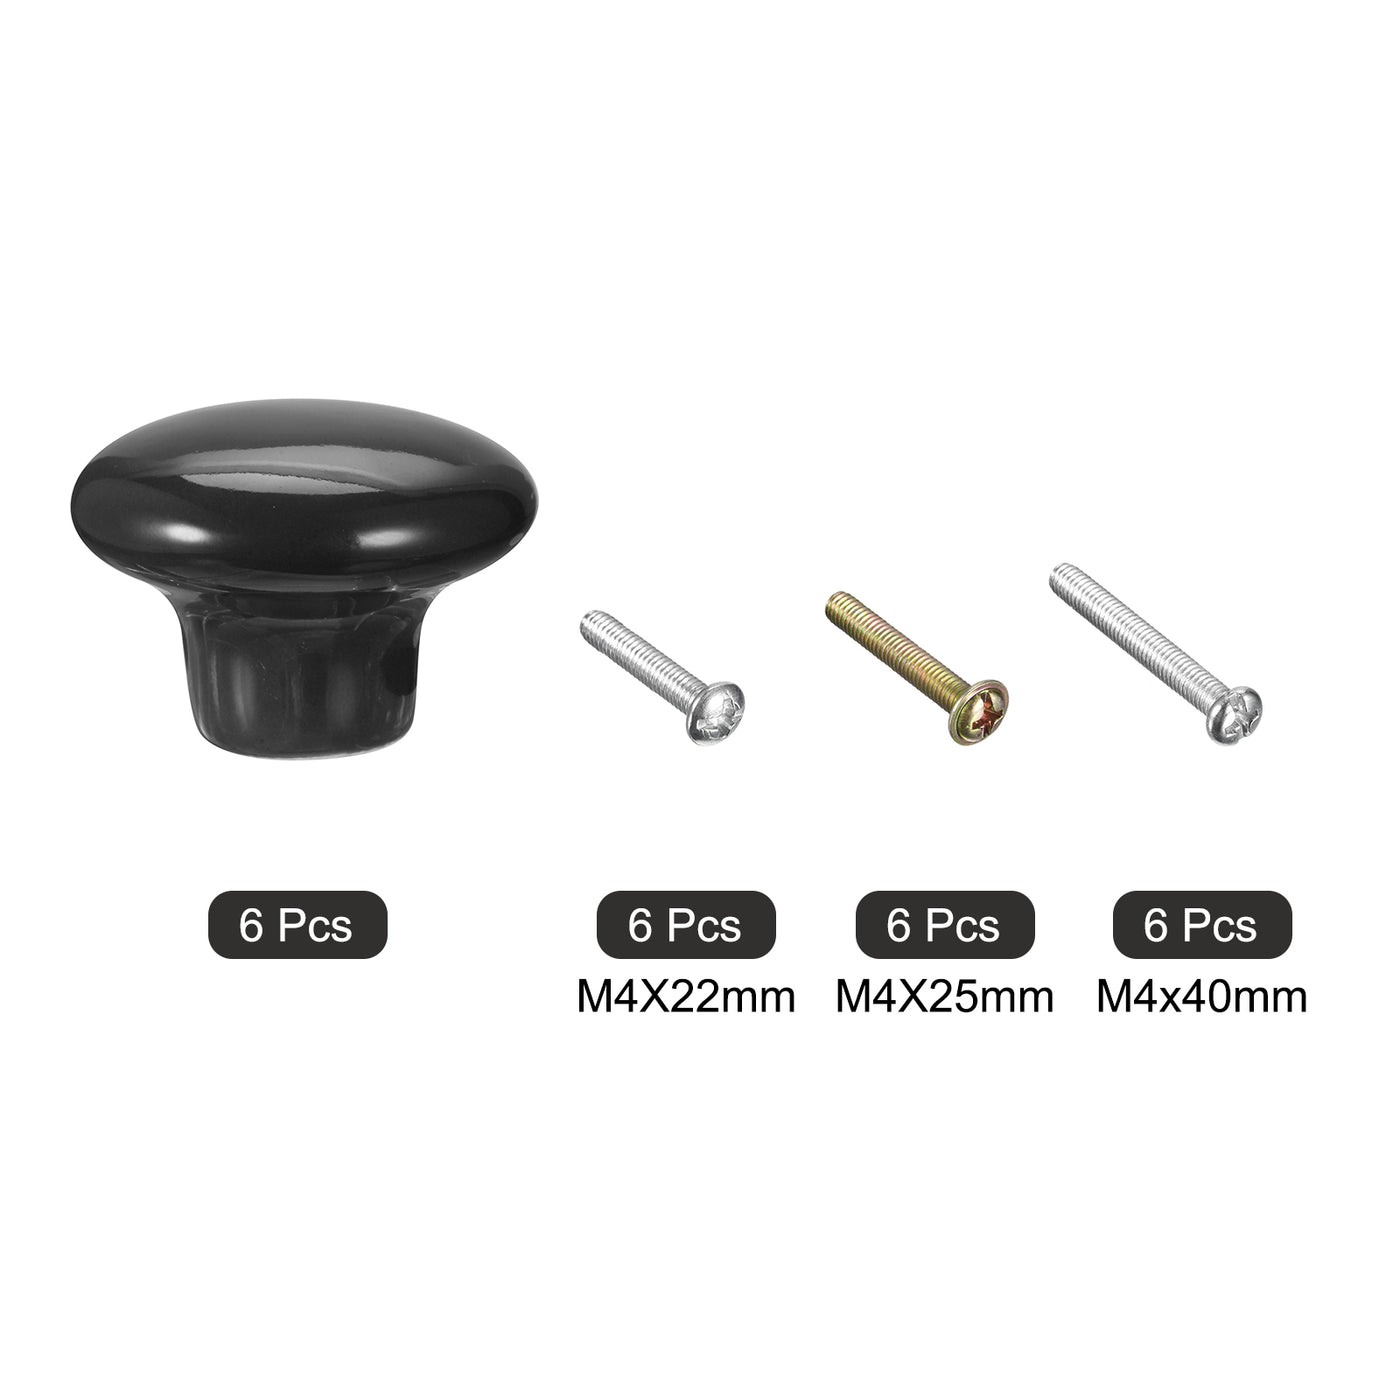 uxcell Uxcell Ceramic Drawer Knobs 6pcs Mushroom Shape Pulls 1.1"x1.5" for Dresser(Black)